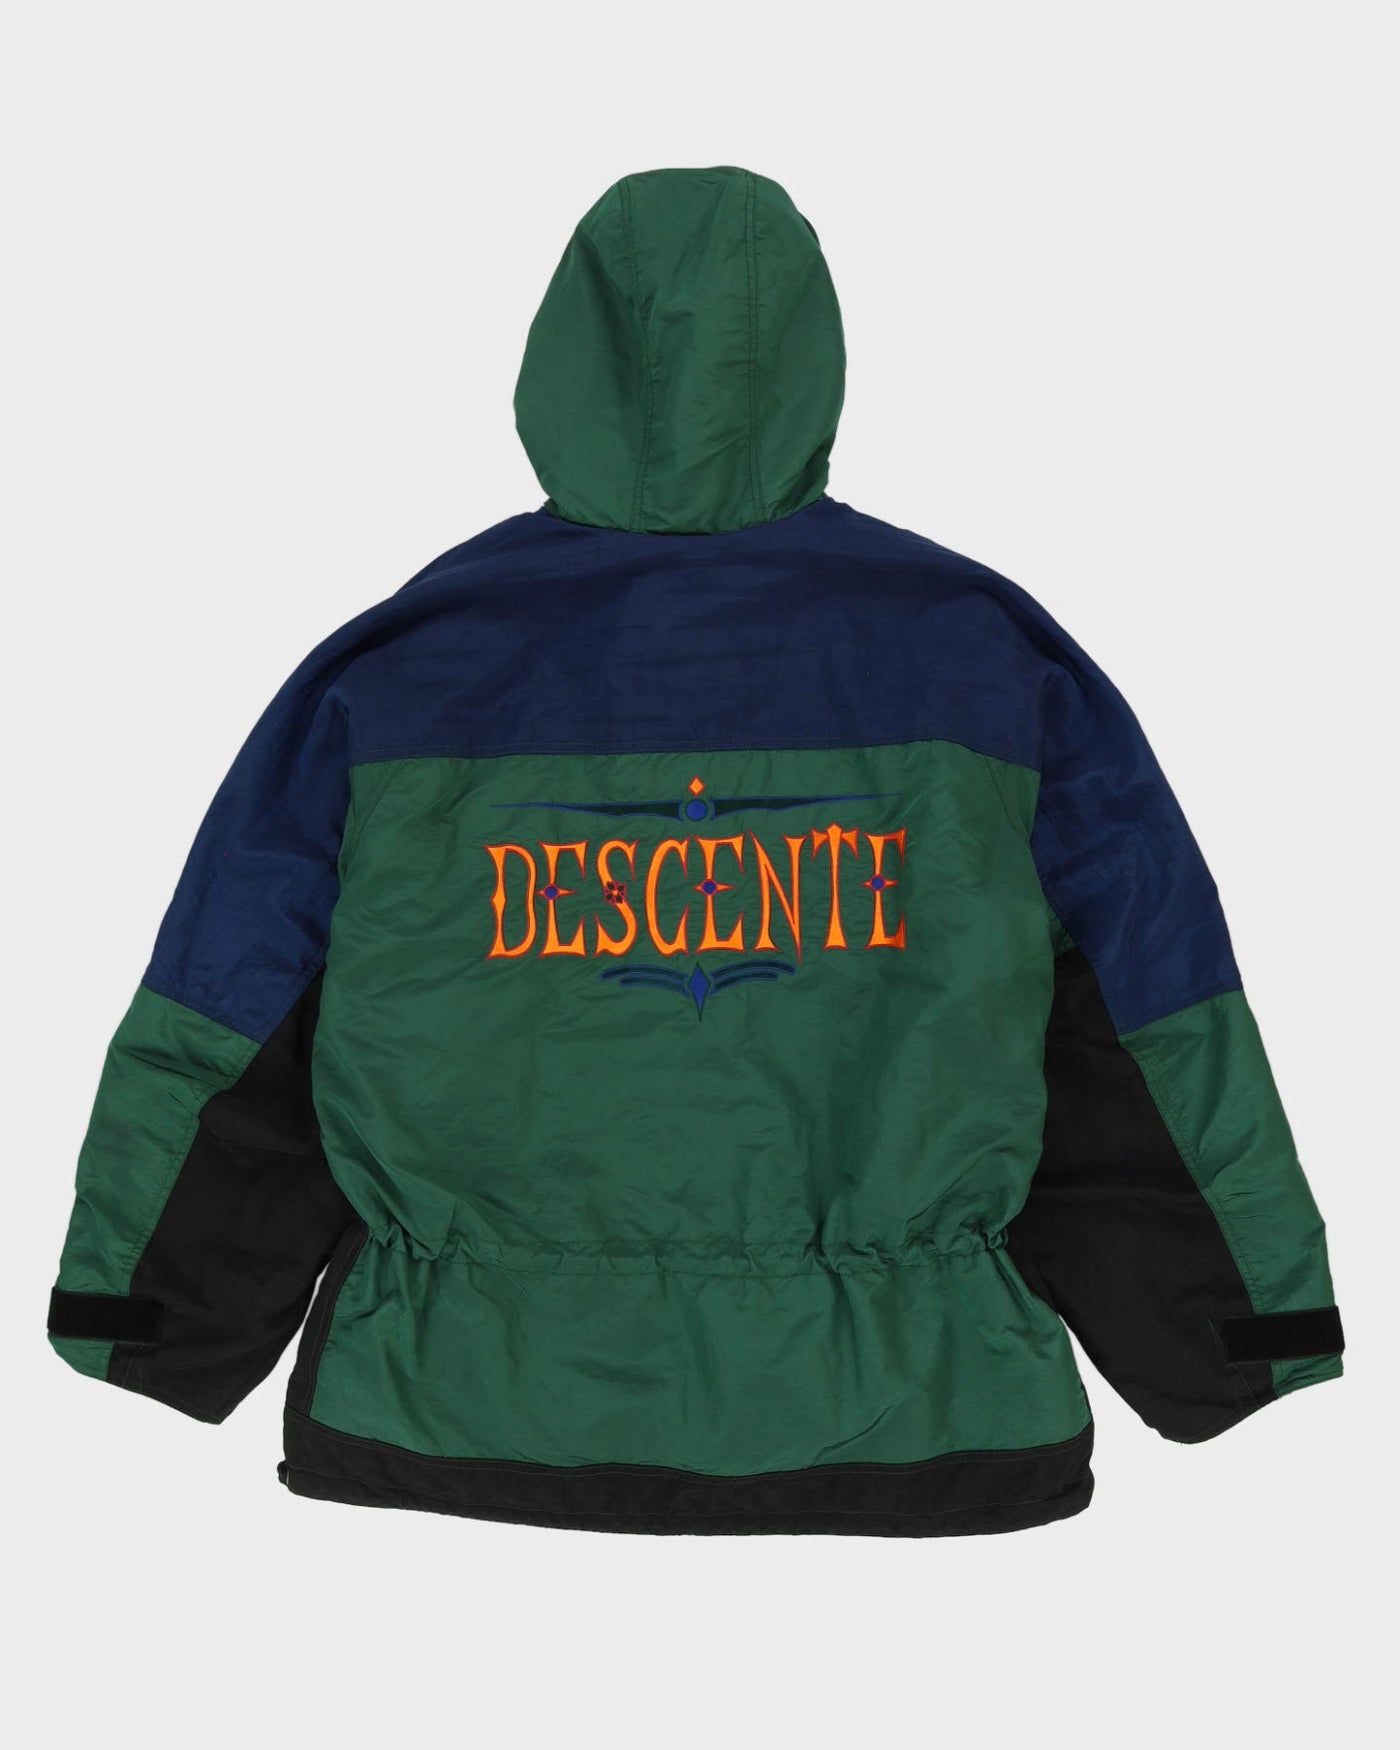 Vintage 90s Descente Green Ski Jacket - XL